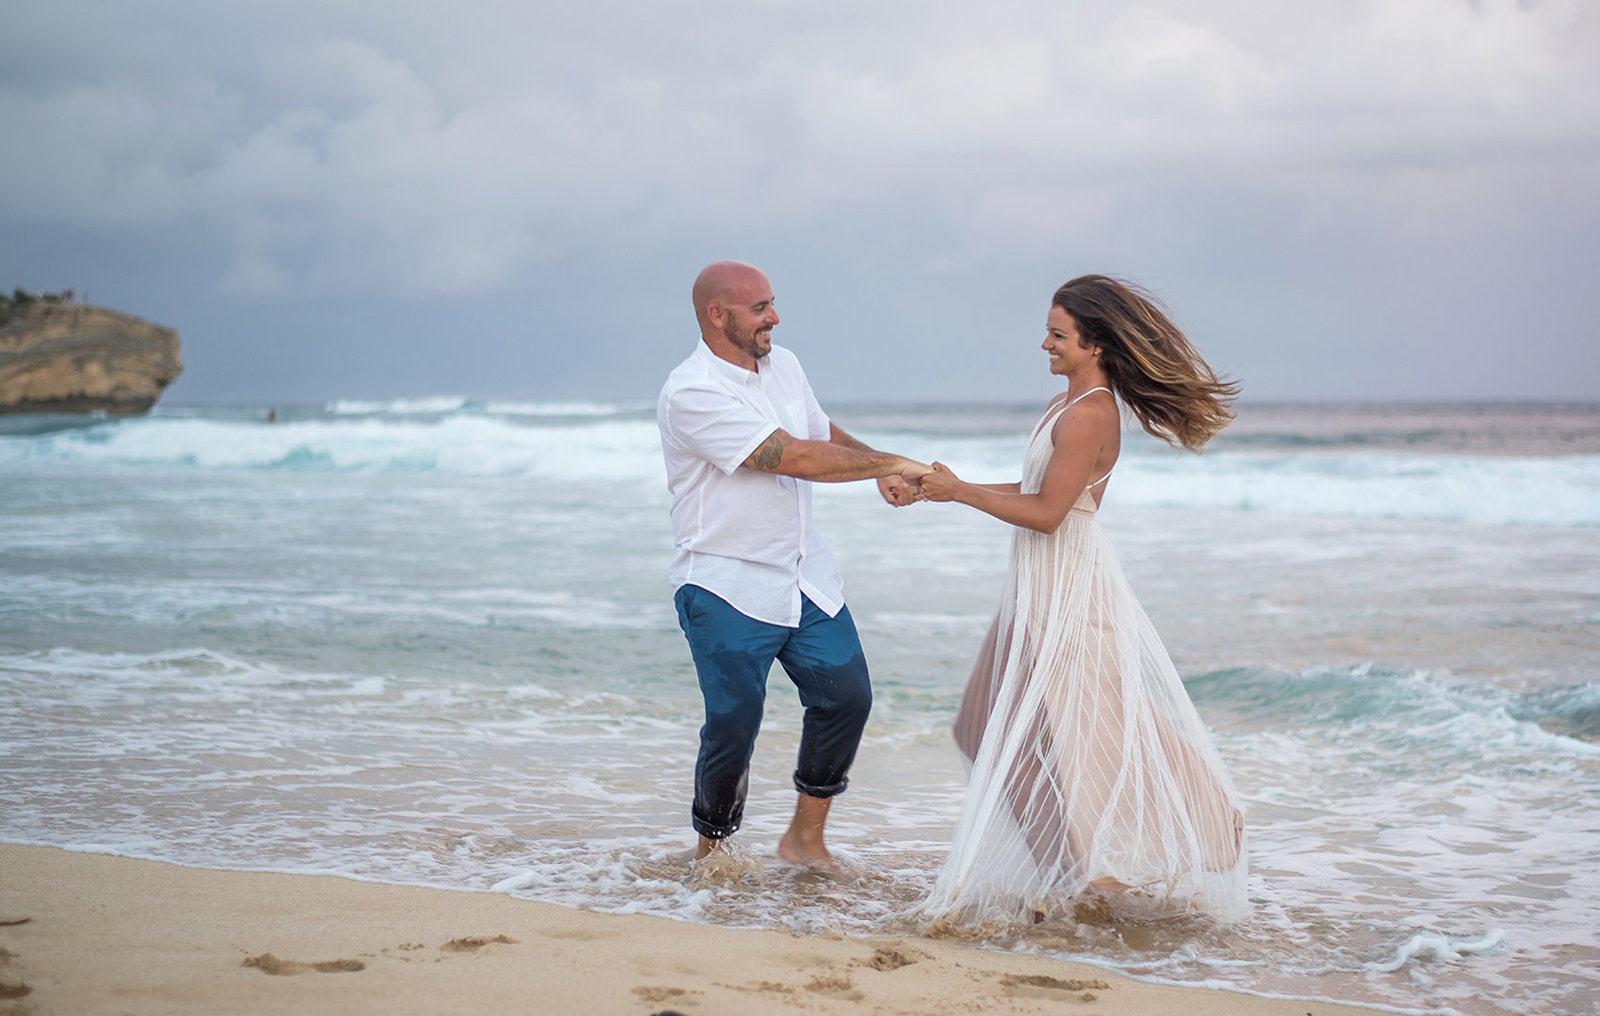 Princeville Photographers | Family |  Weddings  | Couples  | Engagement